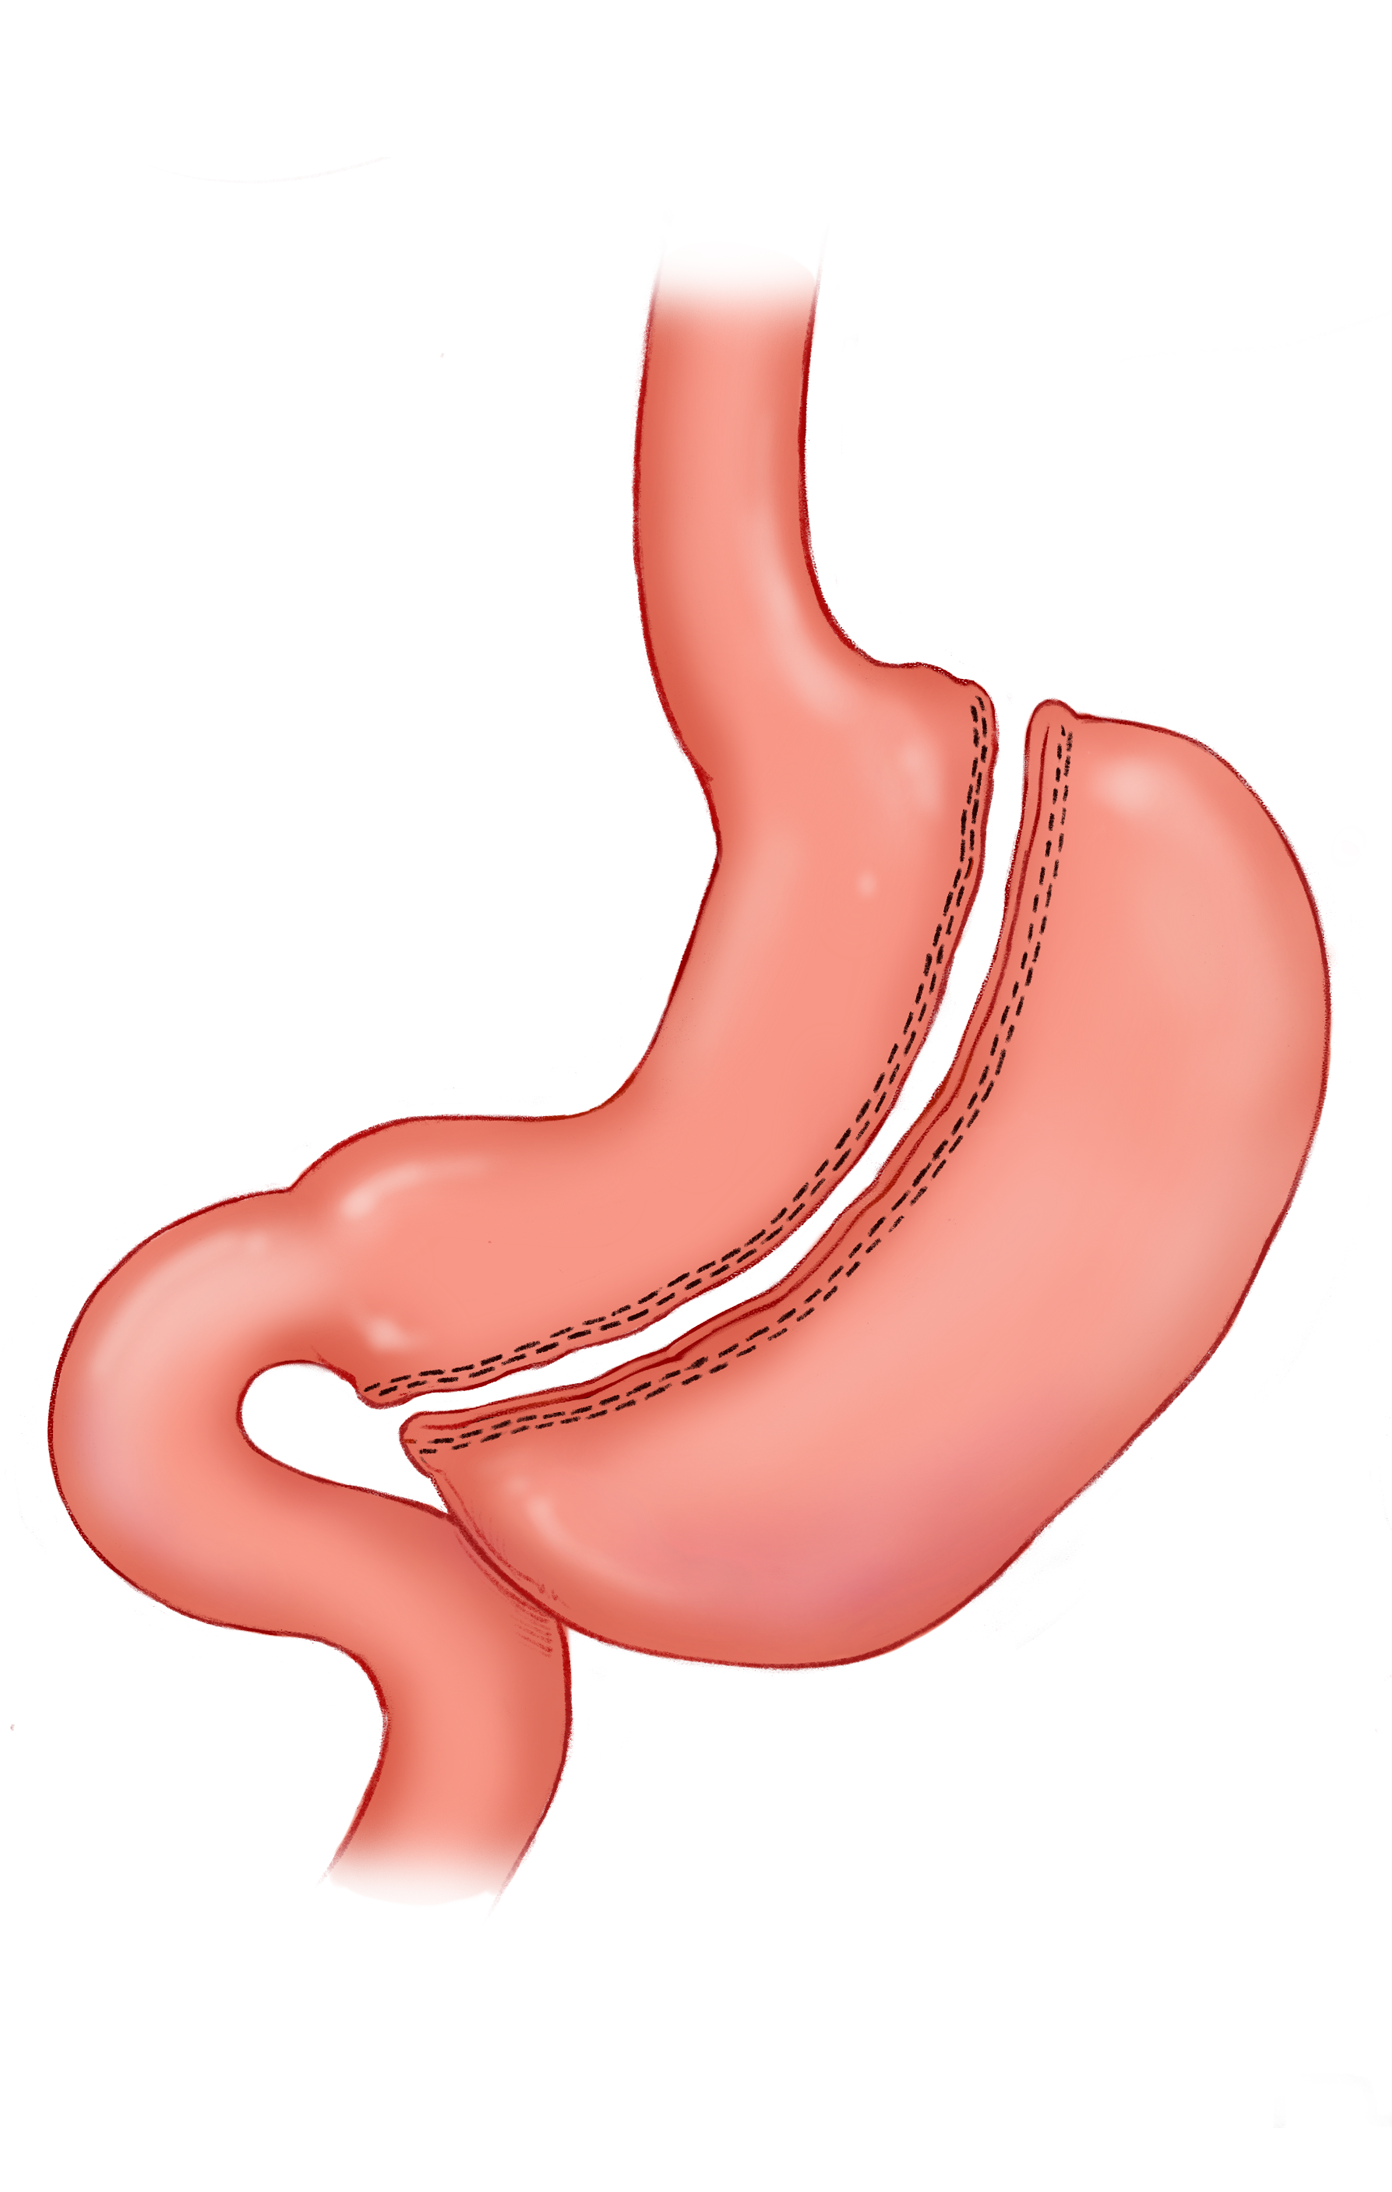 Laparoscopic Sleeve Gastrectomy Normal Post Operative Appearance